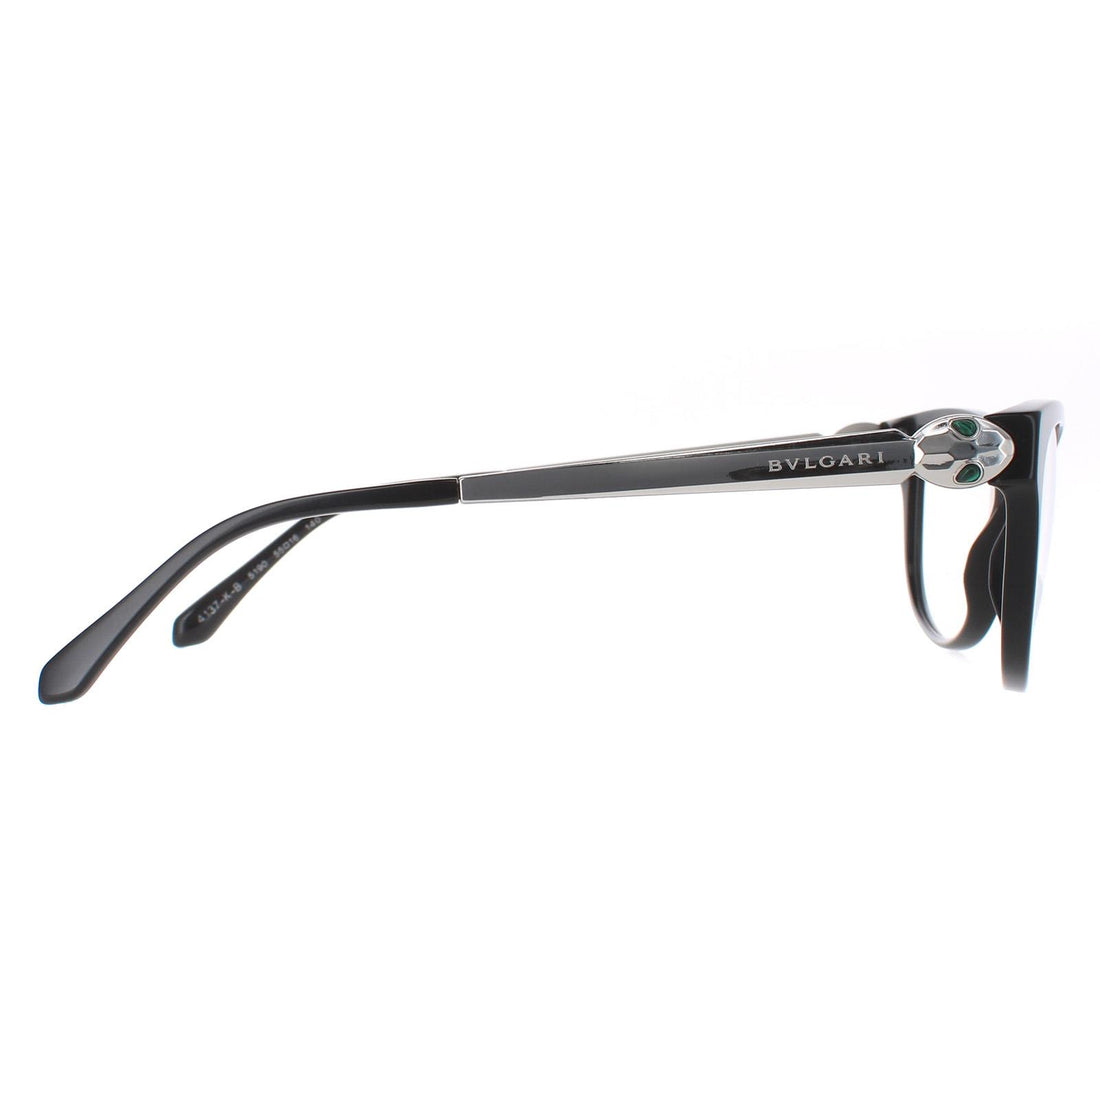 Bvlgari Glasses Frames 4137KB 5190 Black 55mm Womens